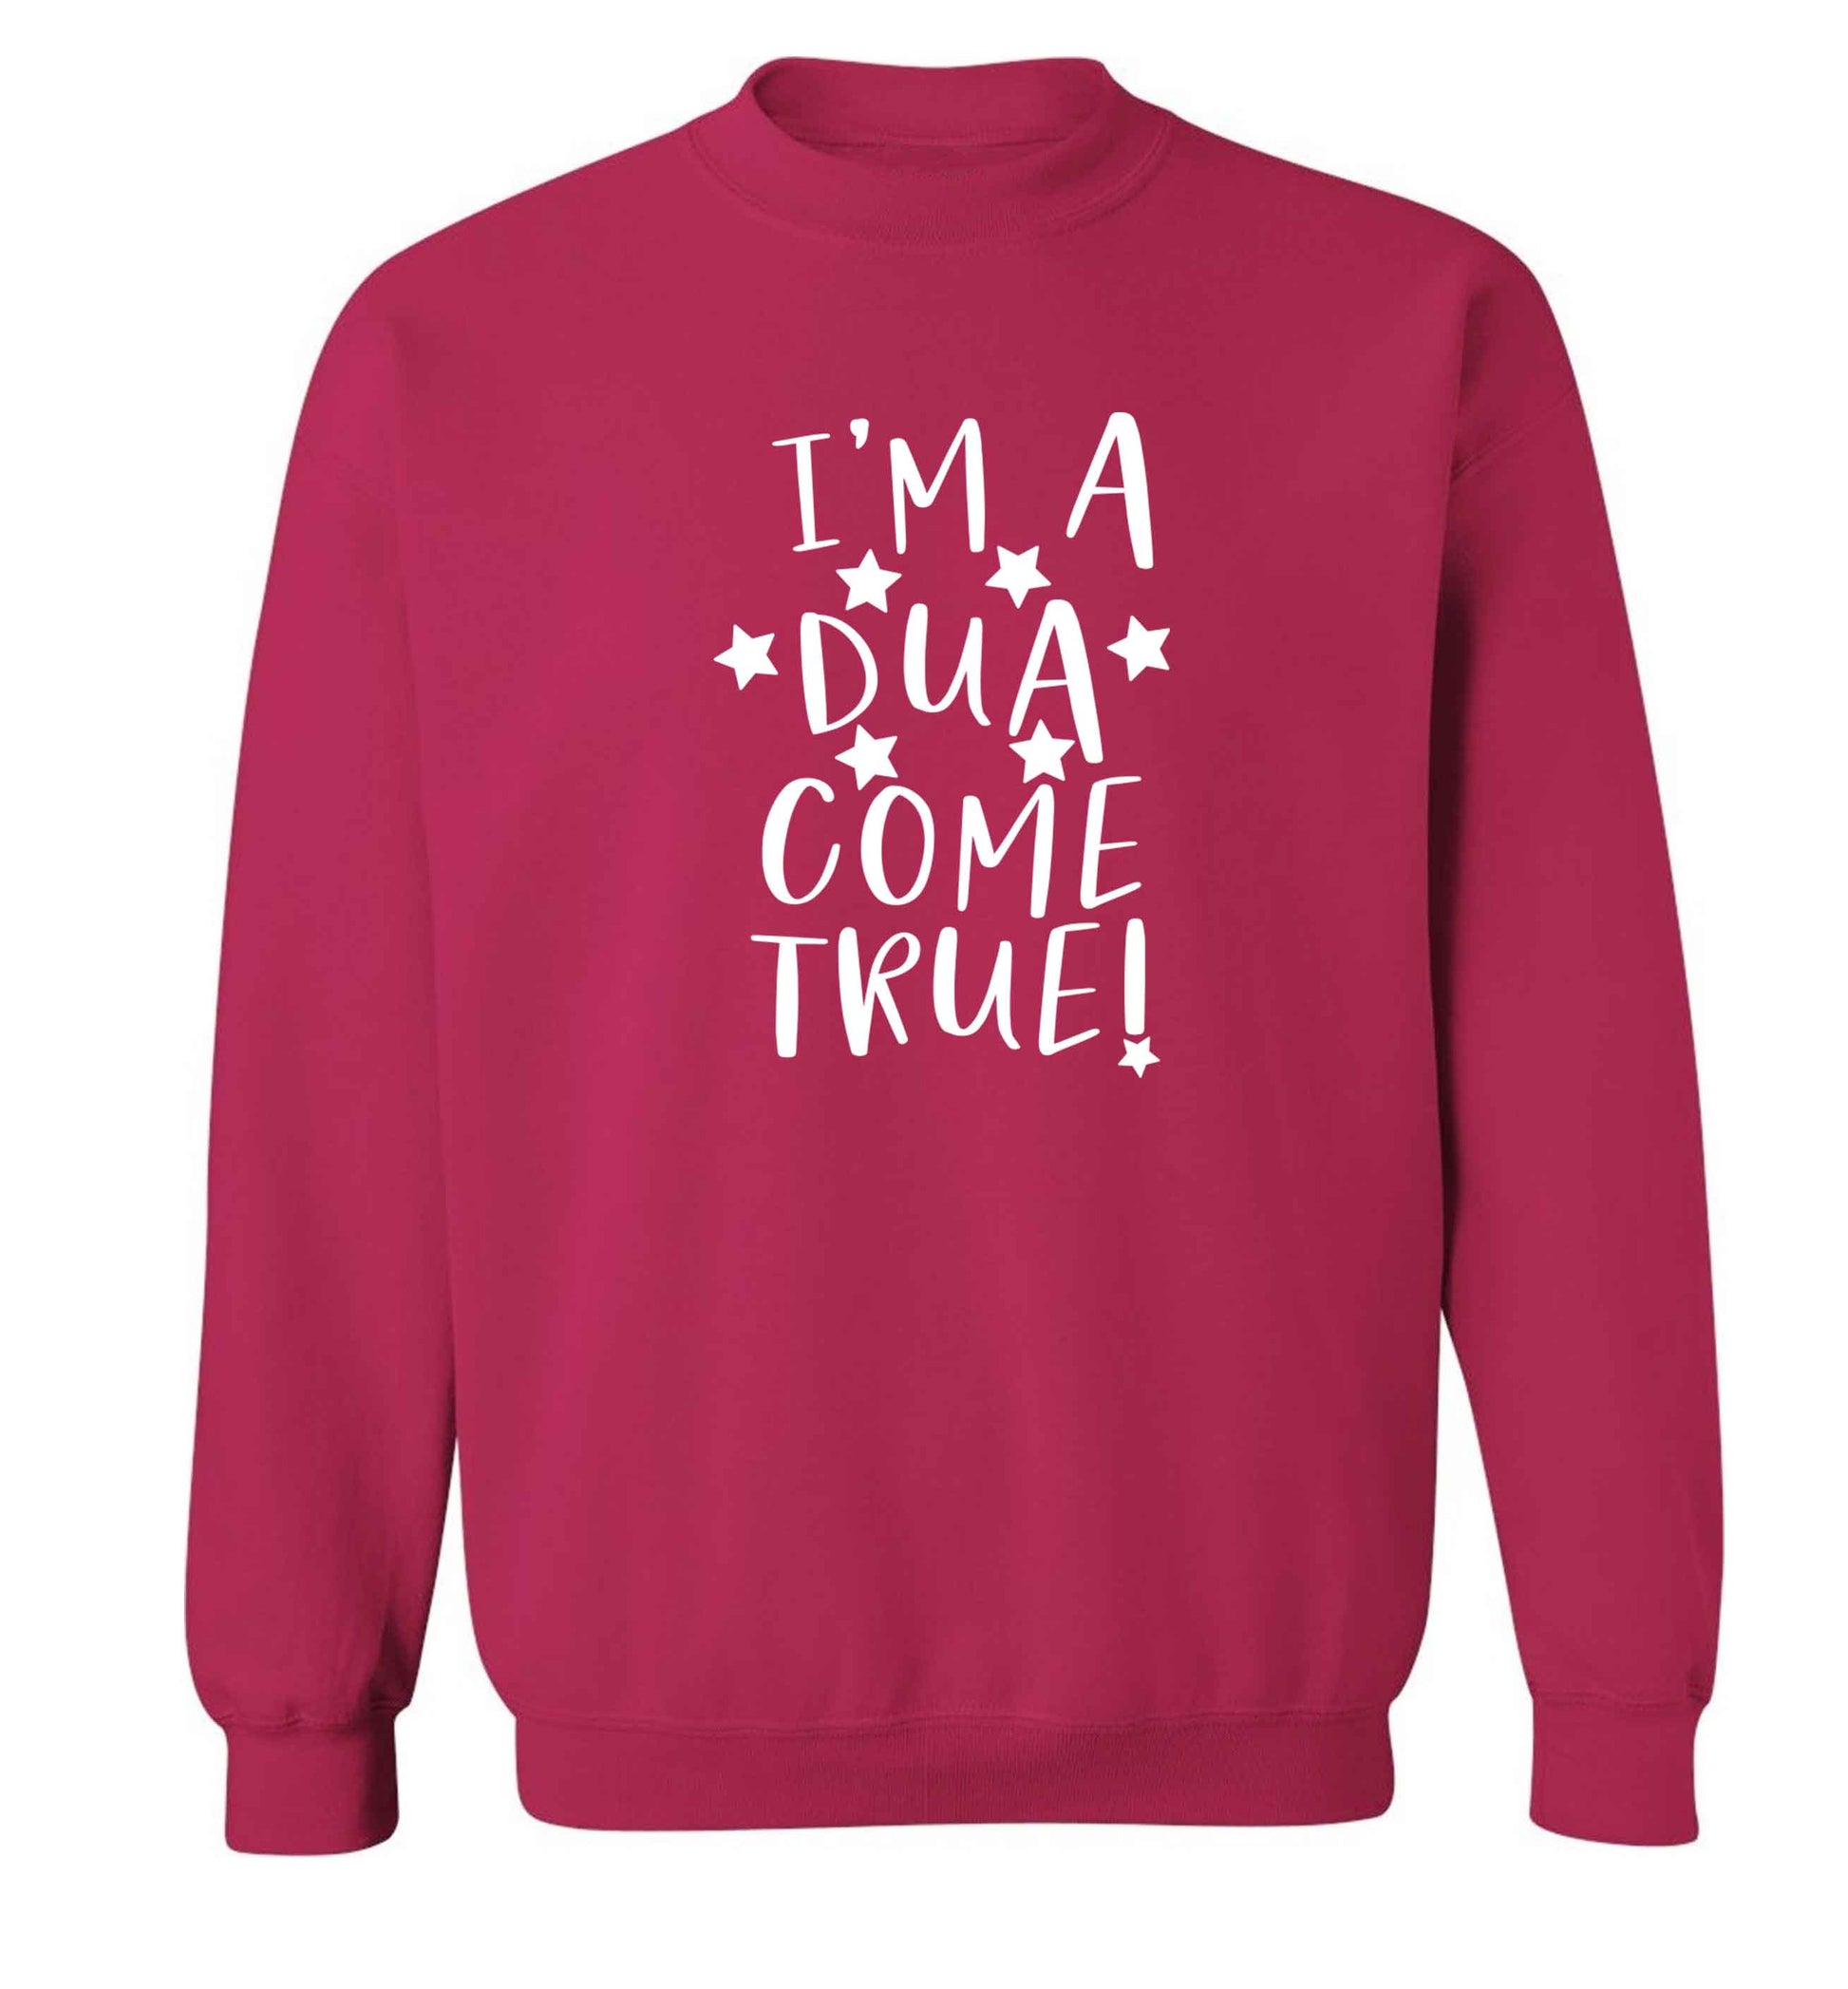 I'm a dua come true adult's unisex pink sweater 2XL